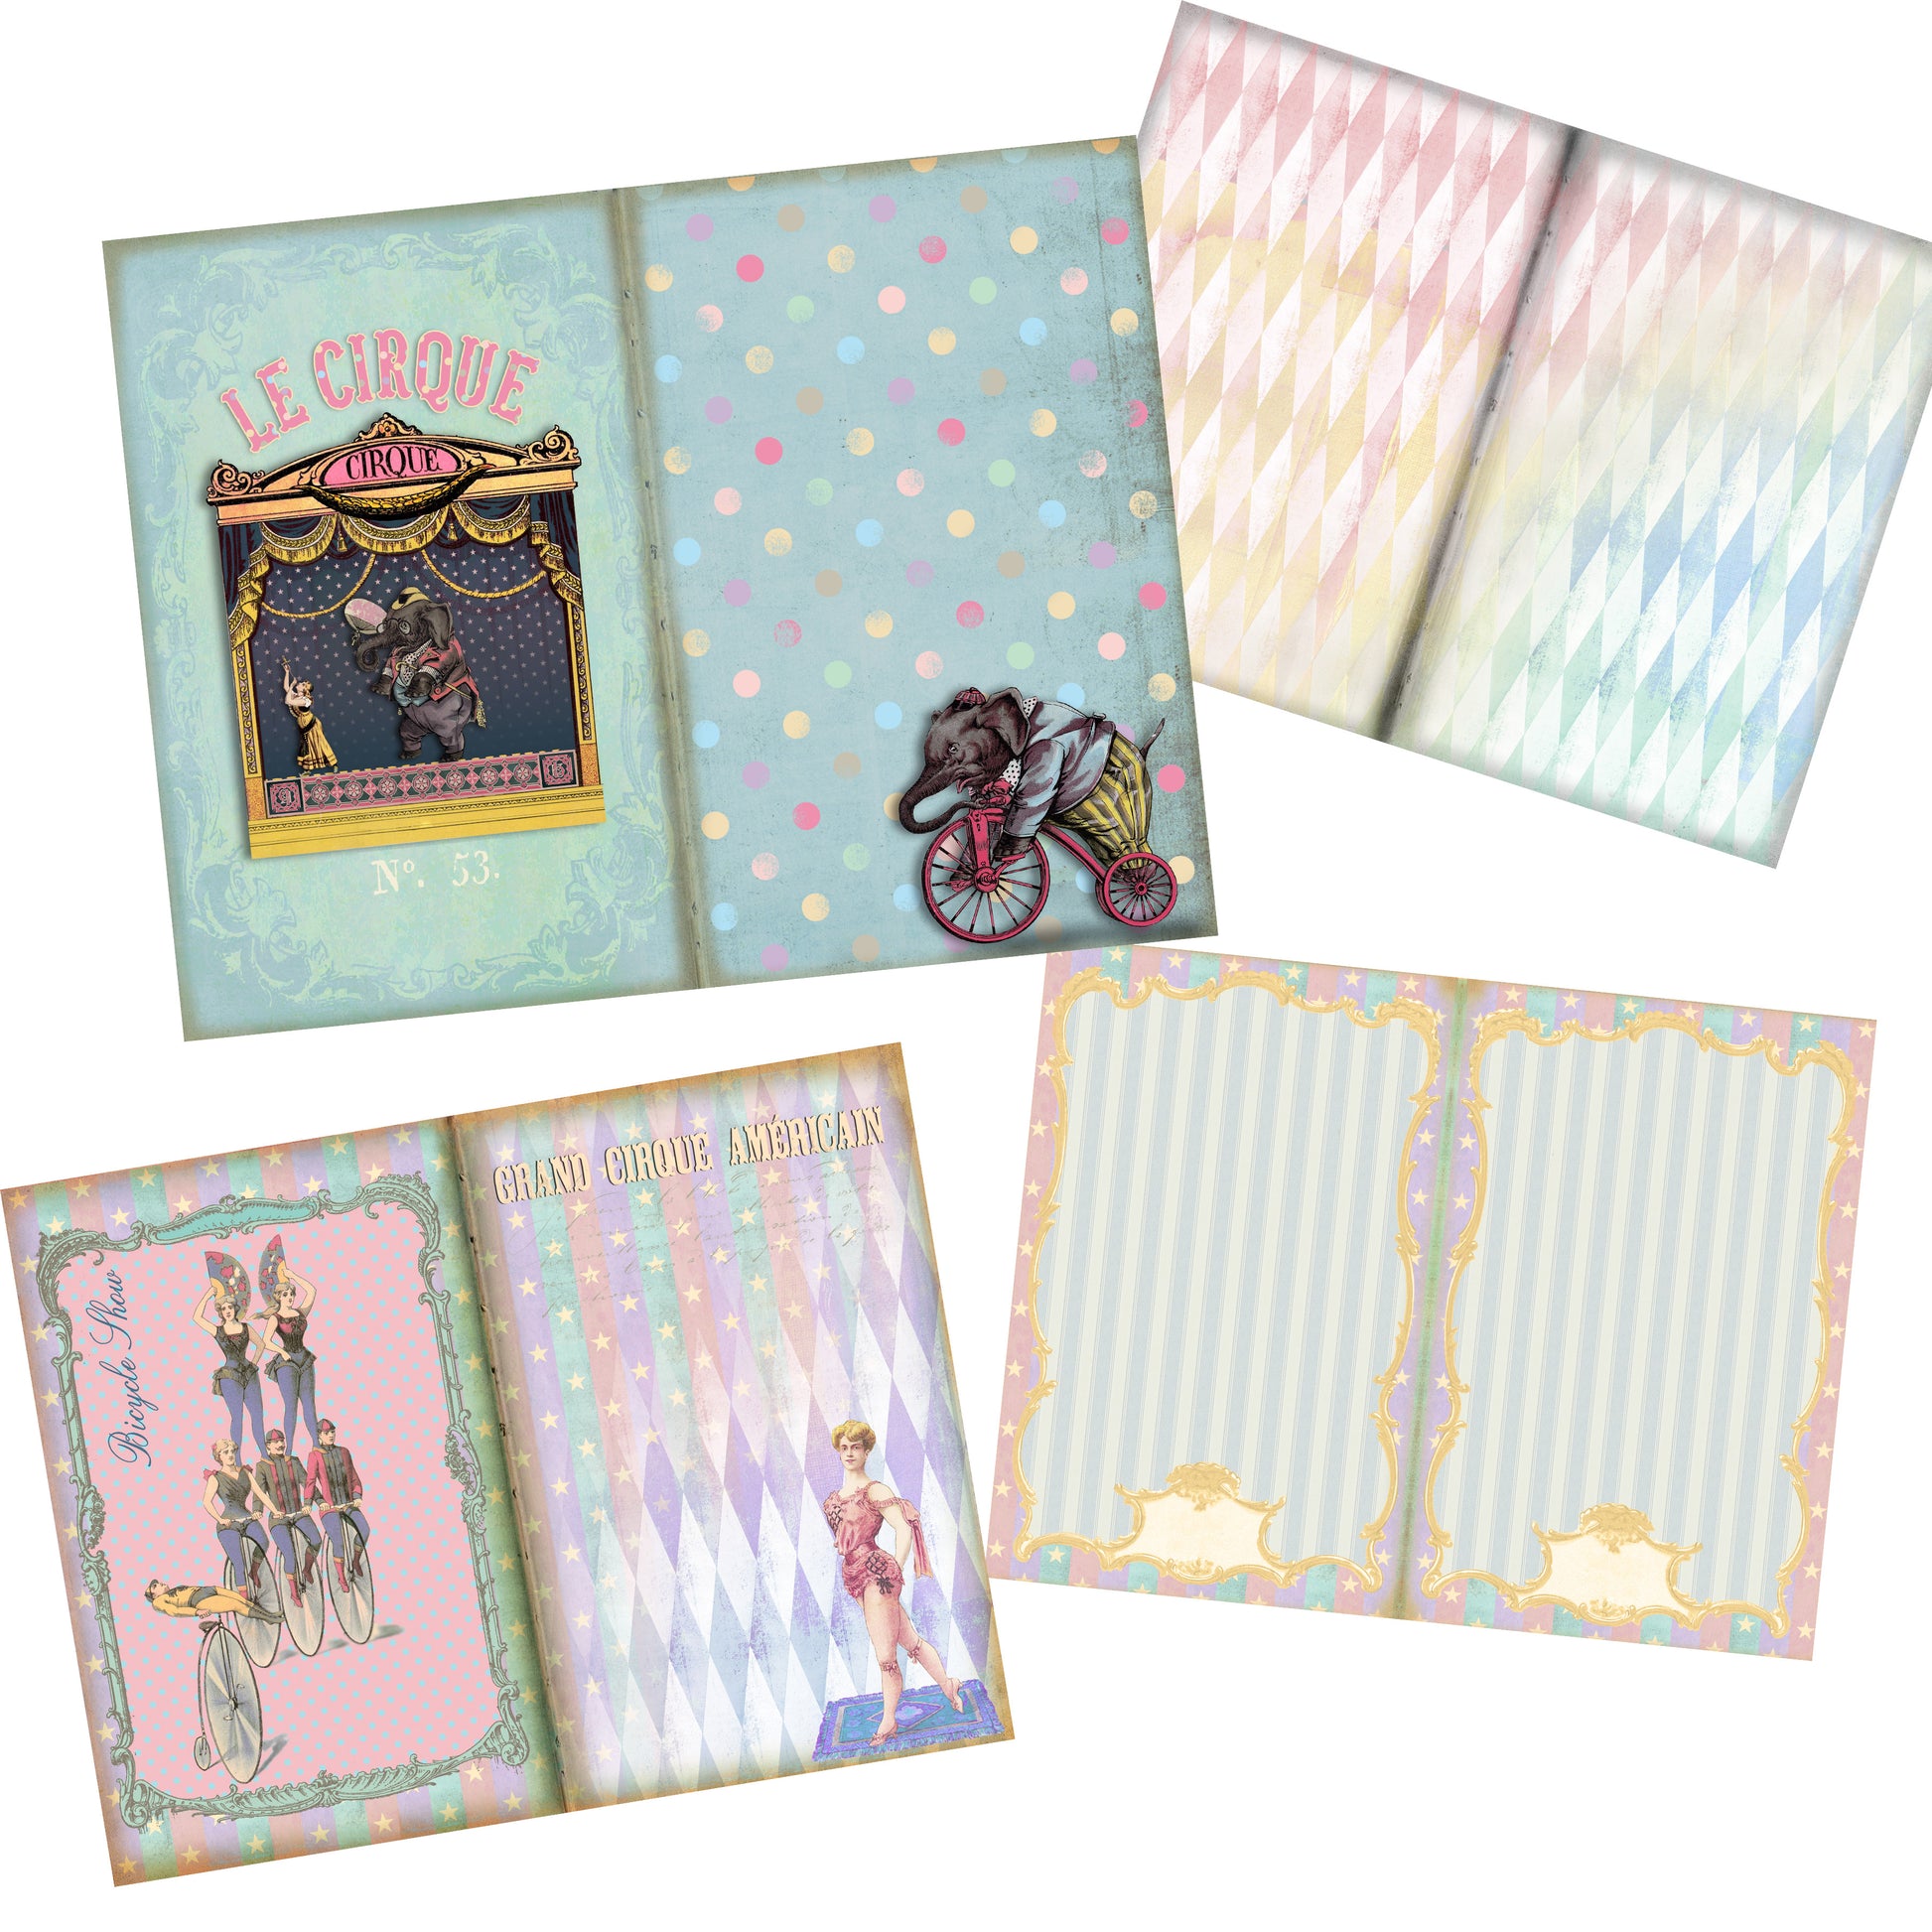 Vintage Circus Journal Kit - 7135 - EZscrapbooks Scrapbook Layouts Journals